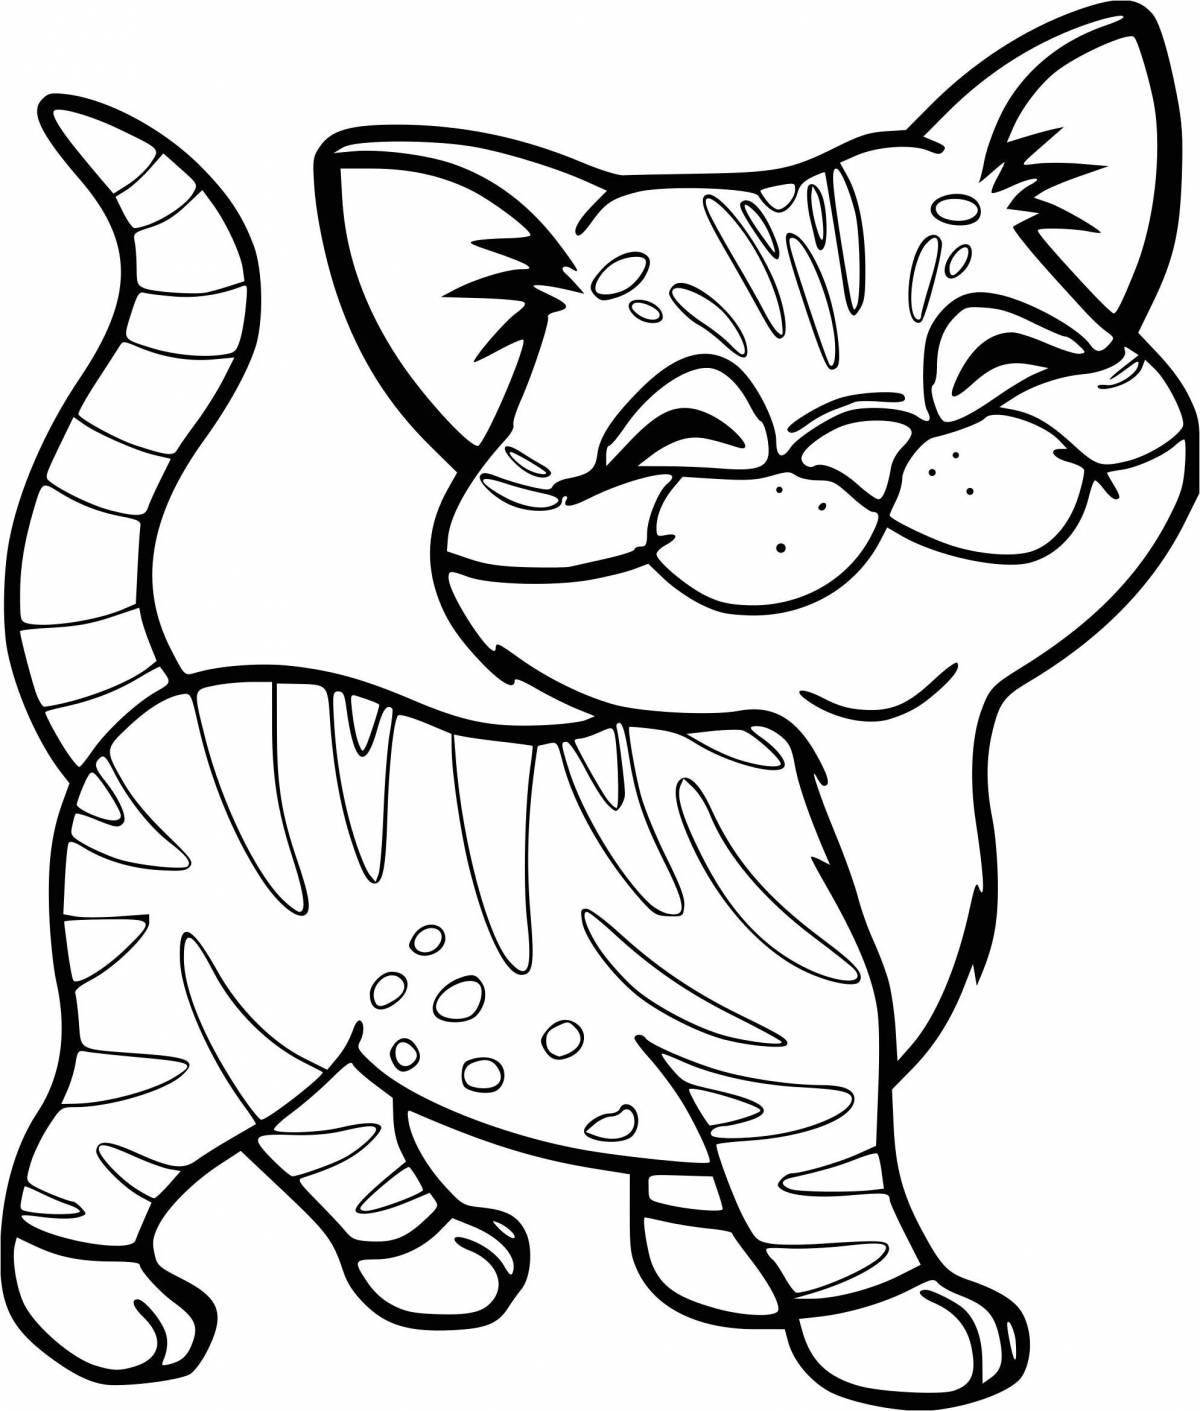 Exquisite mrrr meow coloring page